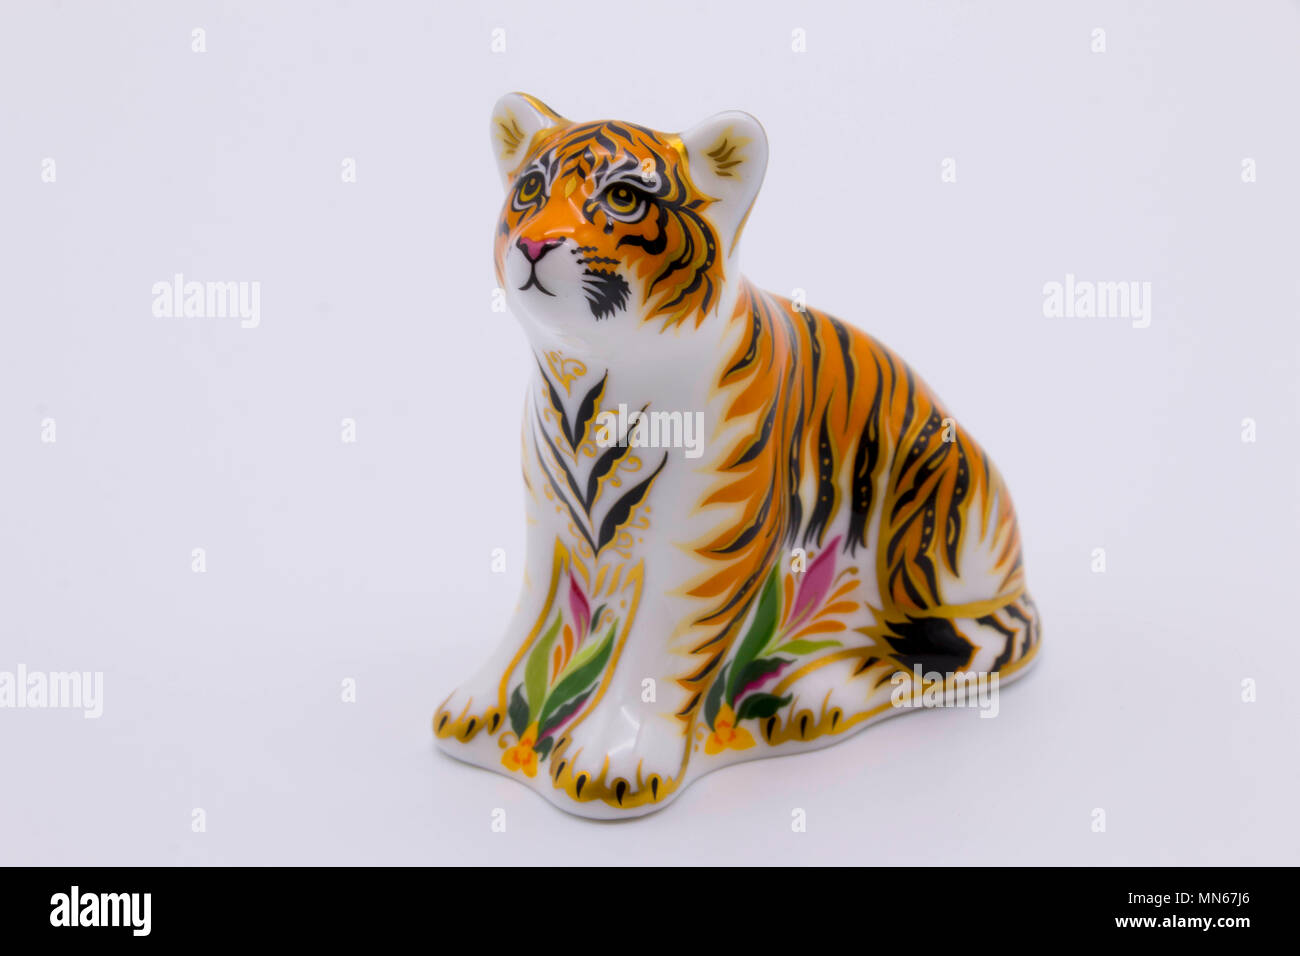 Royal Crown Derby bone china paperweight sumatran tiger cub uk Stock Photo